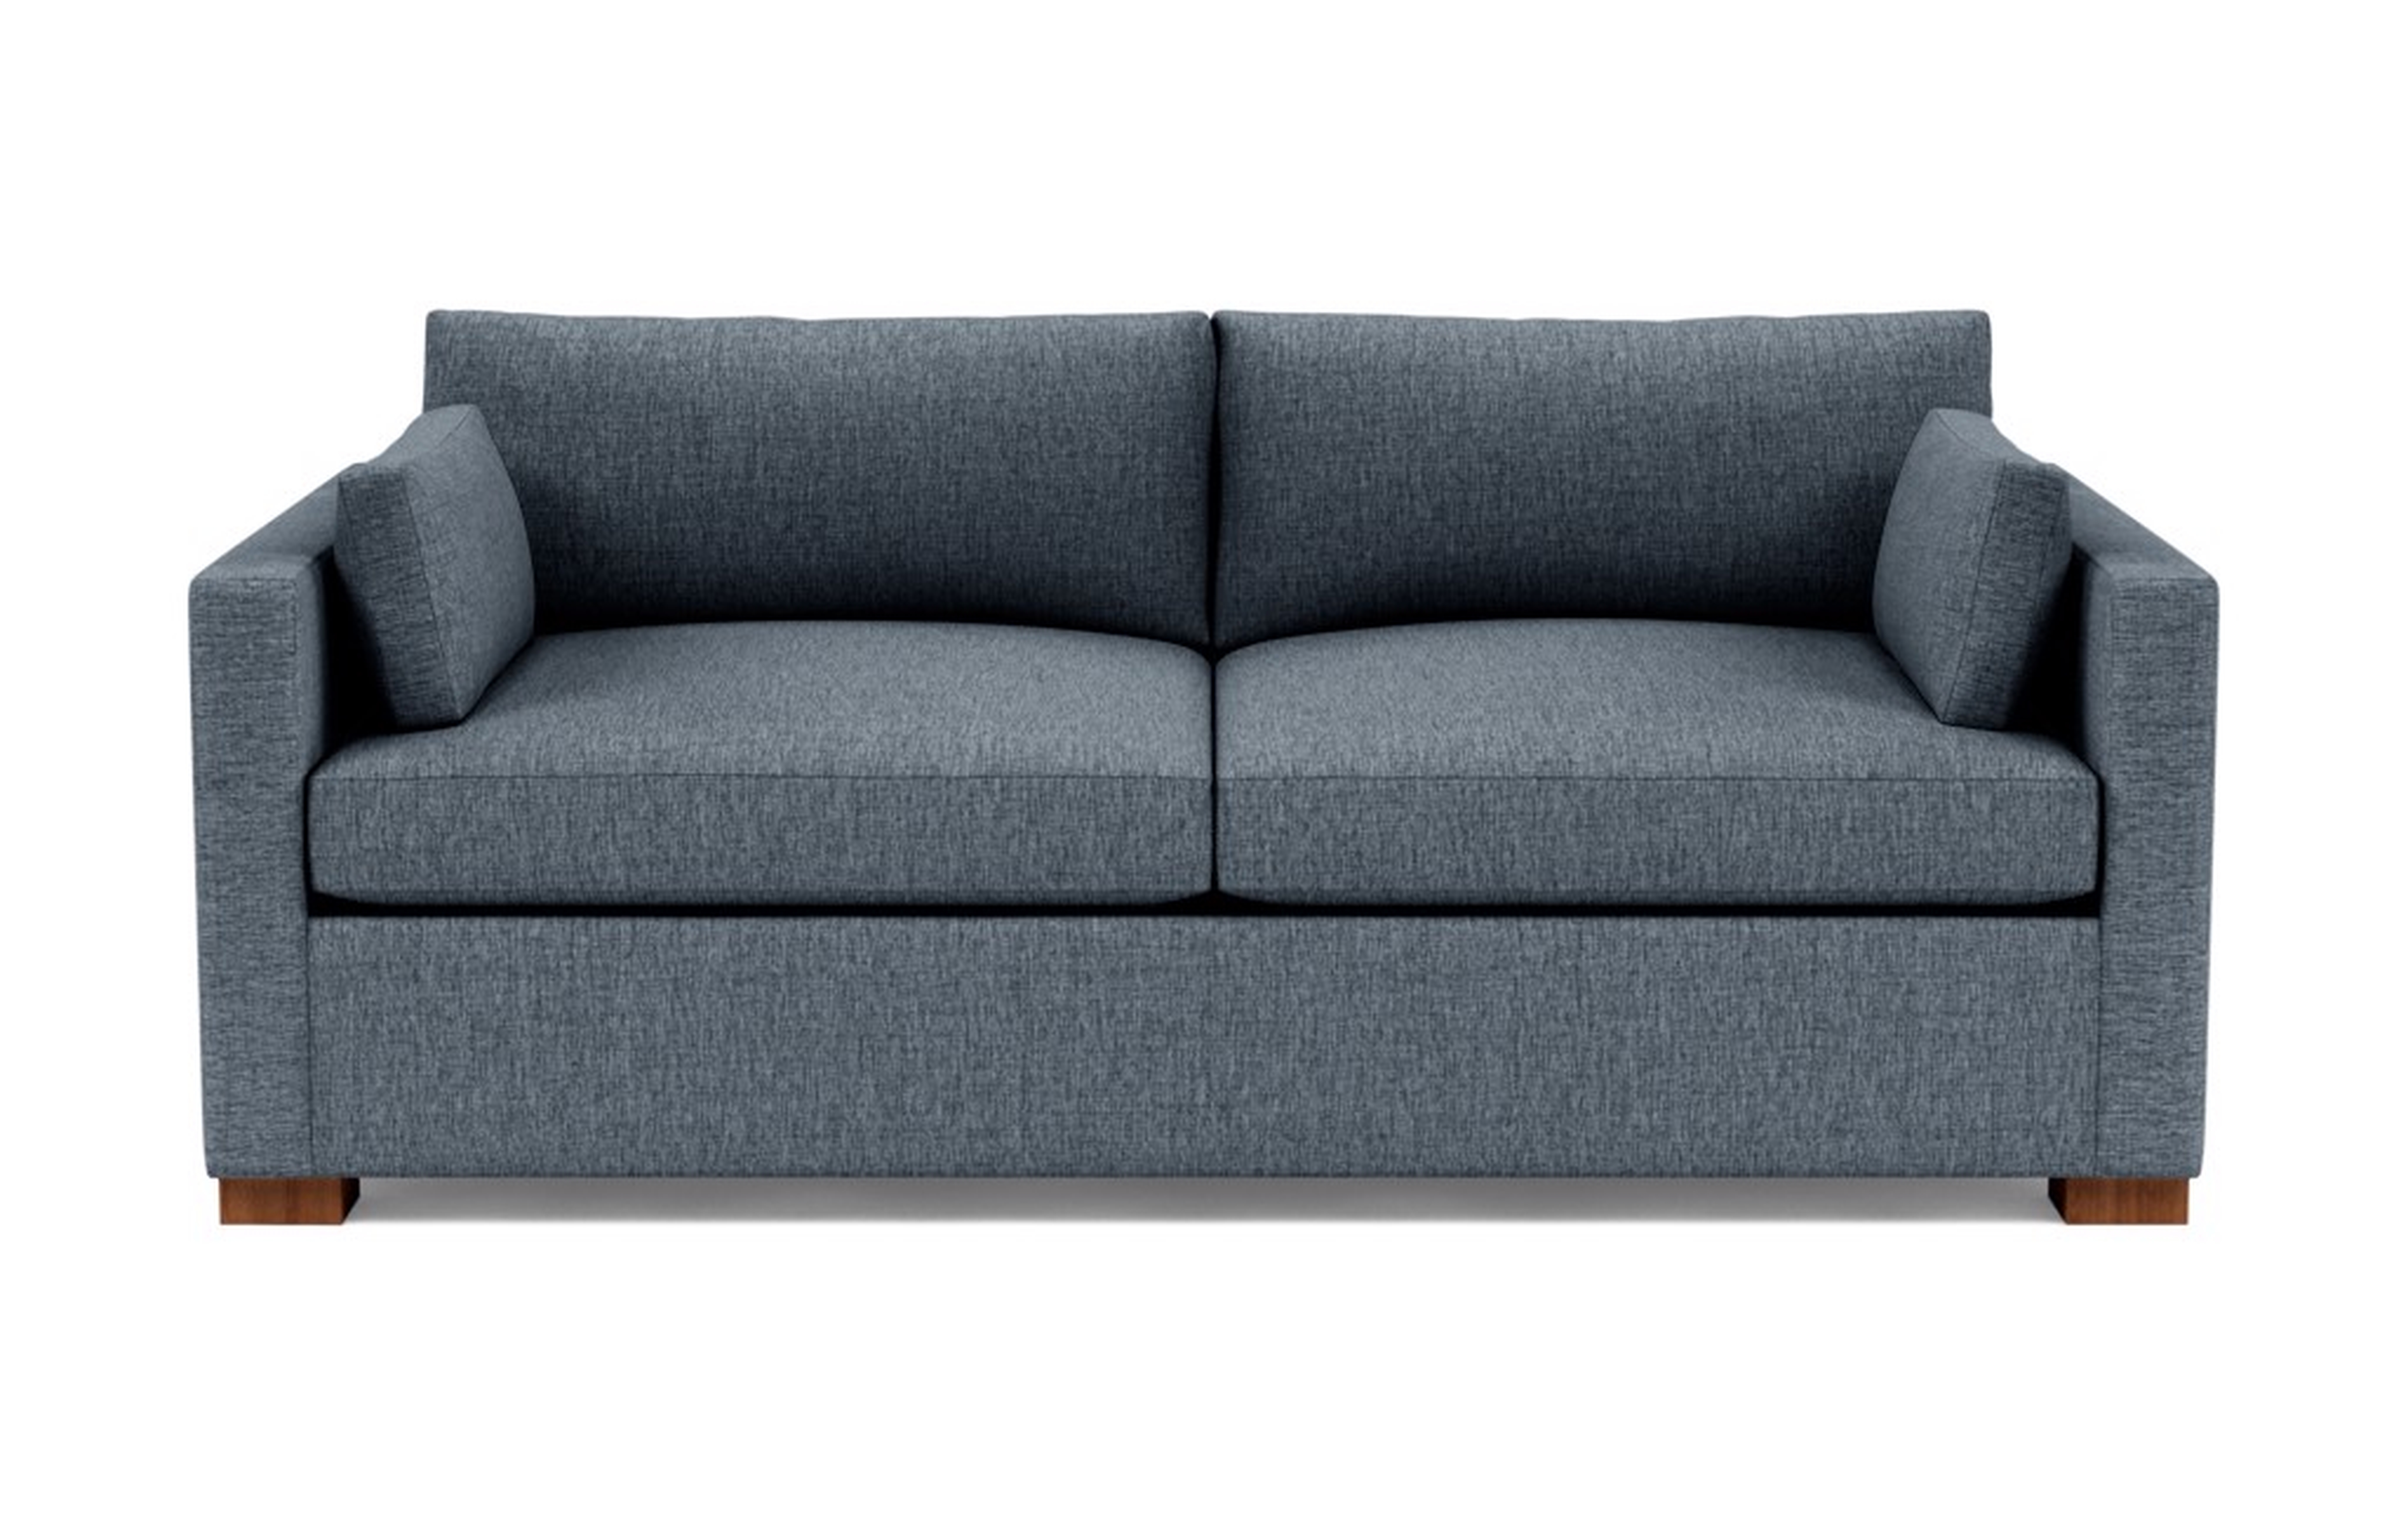 CHARLY Fabric Sofa 75 x 37 - Interior Define